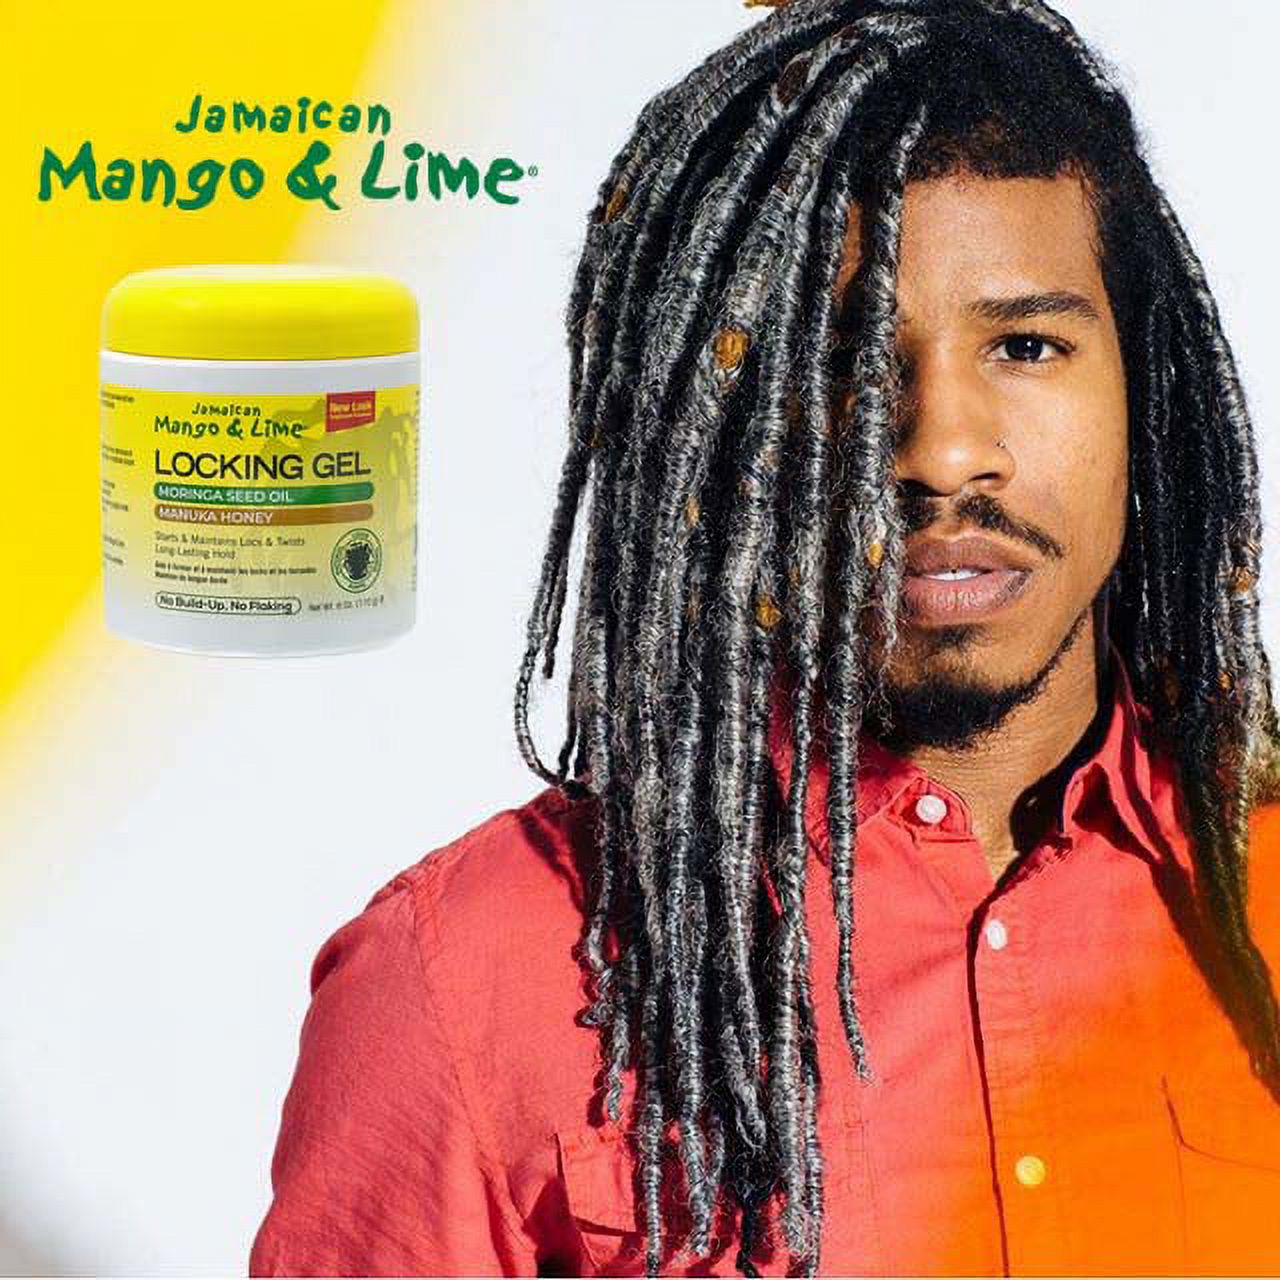 Jamaican Mango & Lime Frizz Control Jar Hair Styling & Locking Gel, Unisex, 6 oz - image 3 of 6